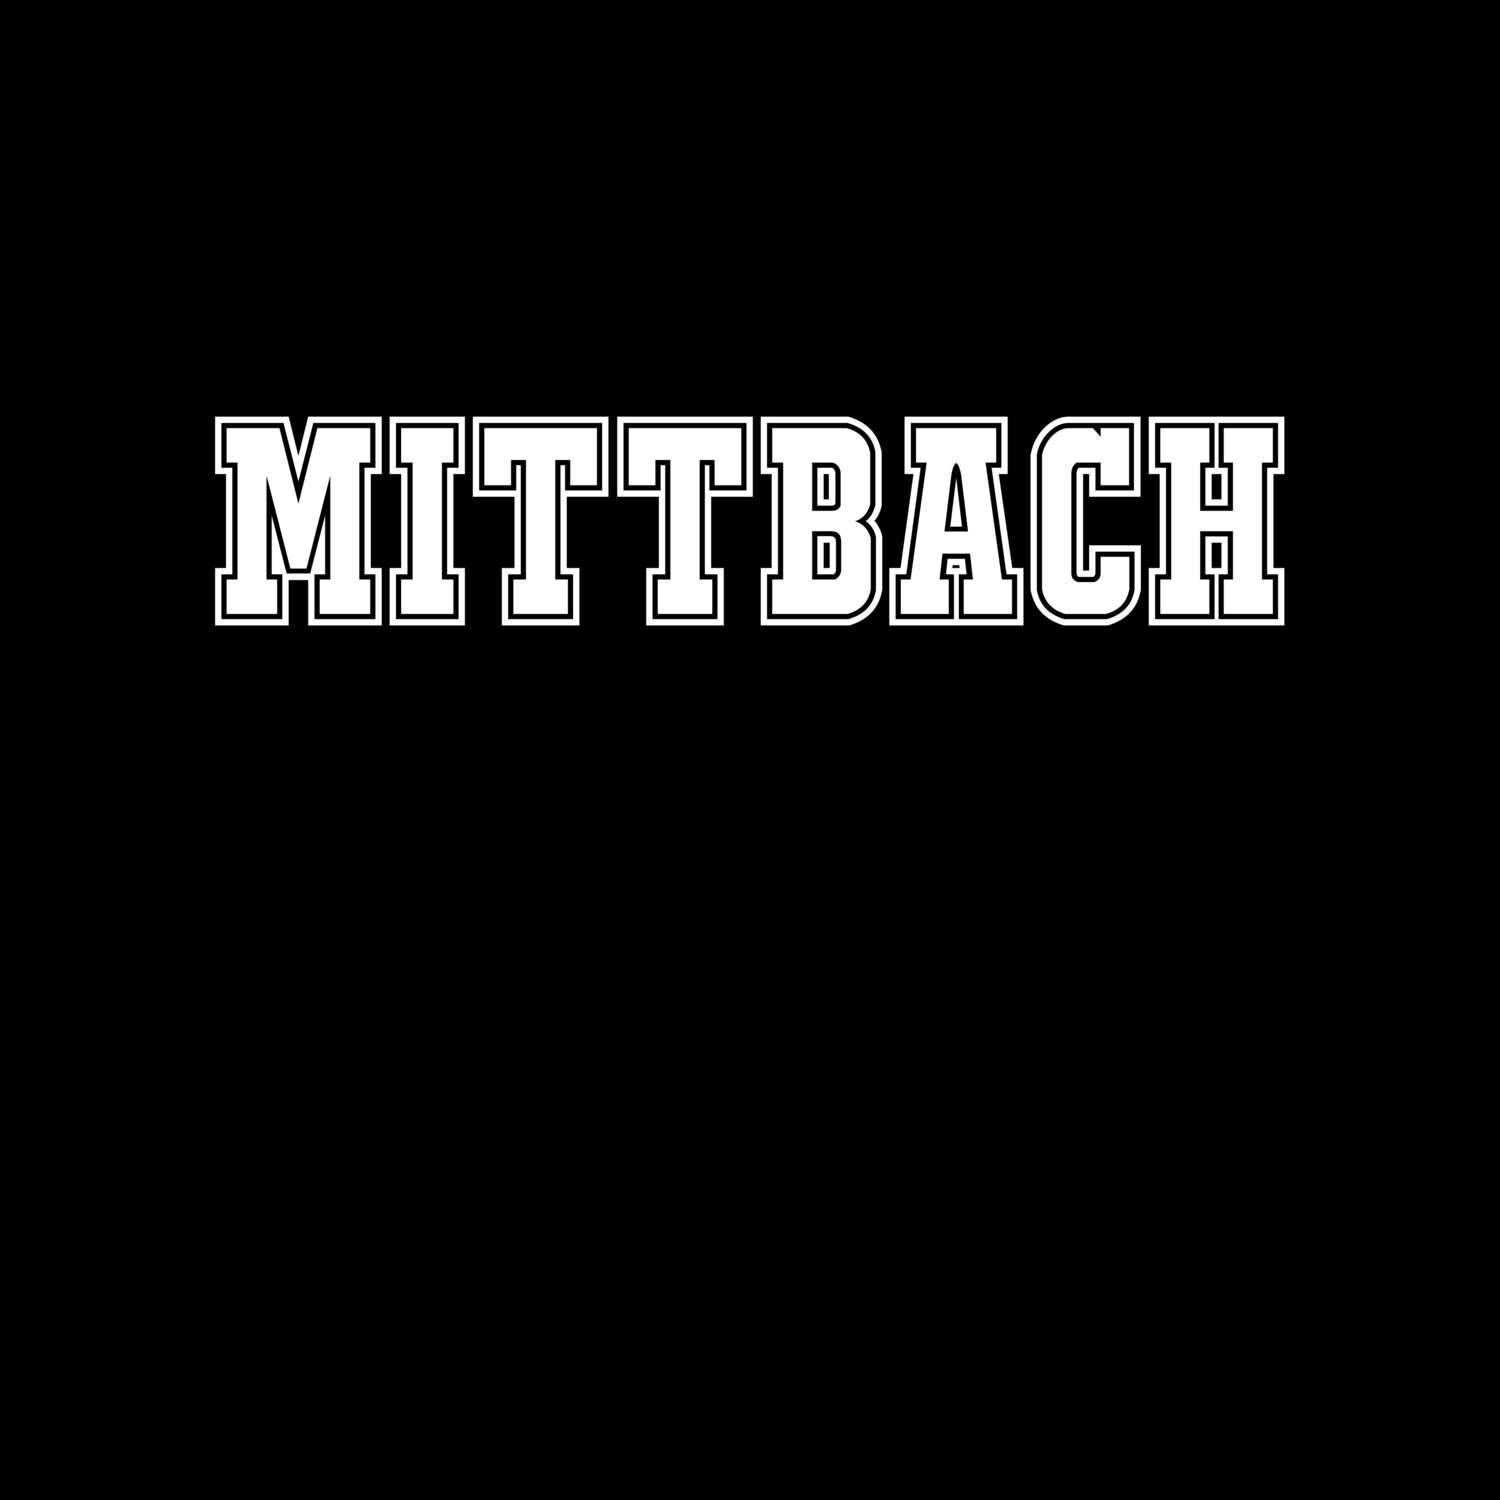 Mittbach T-Shirt »Classic«